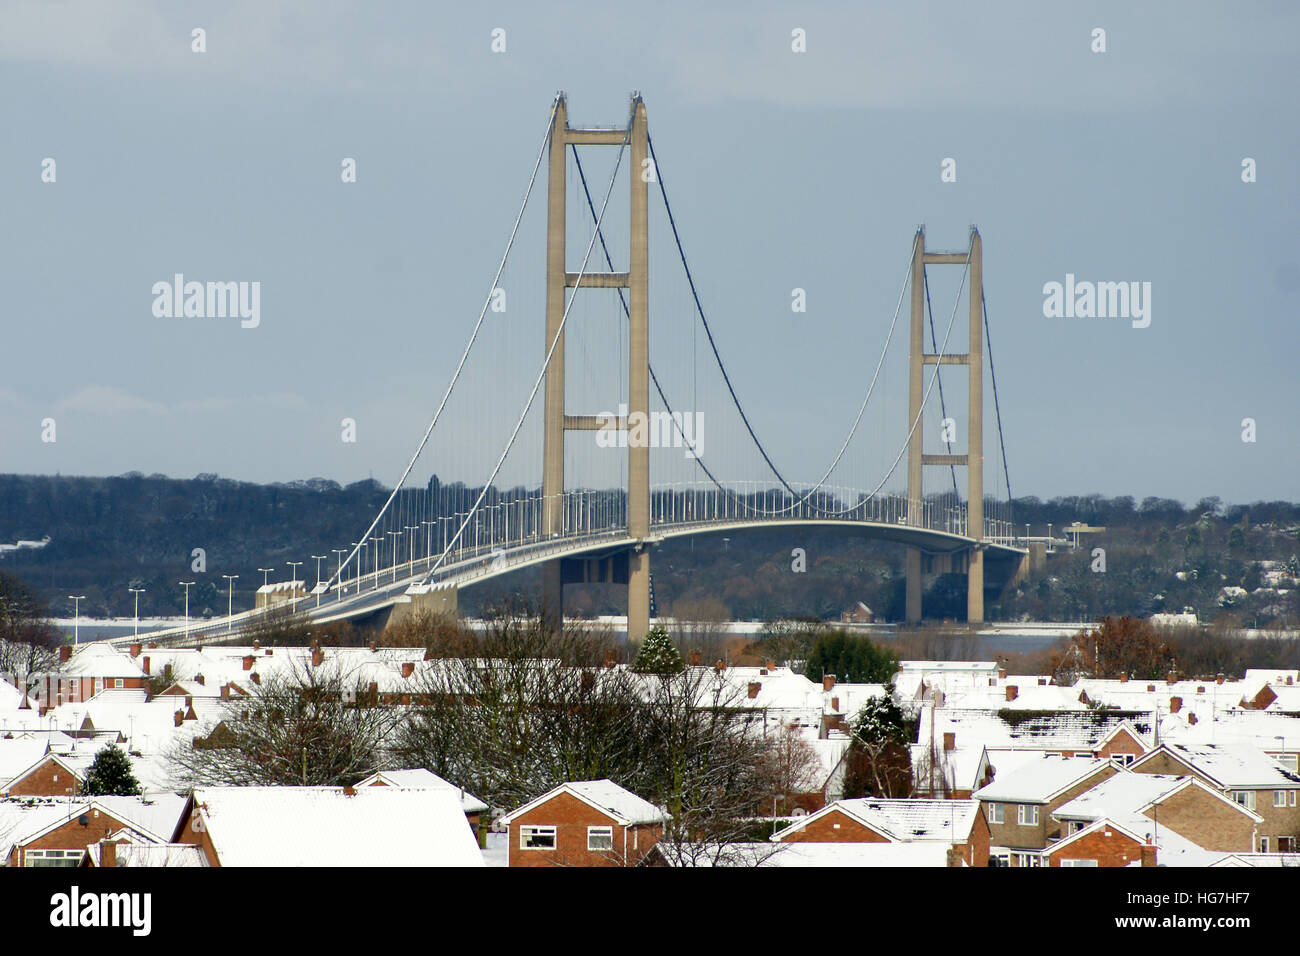 Humber bridge, barton on humber, single span suspension bridge, snow covered landscape Stock Photo